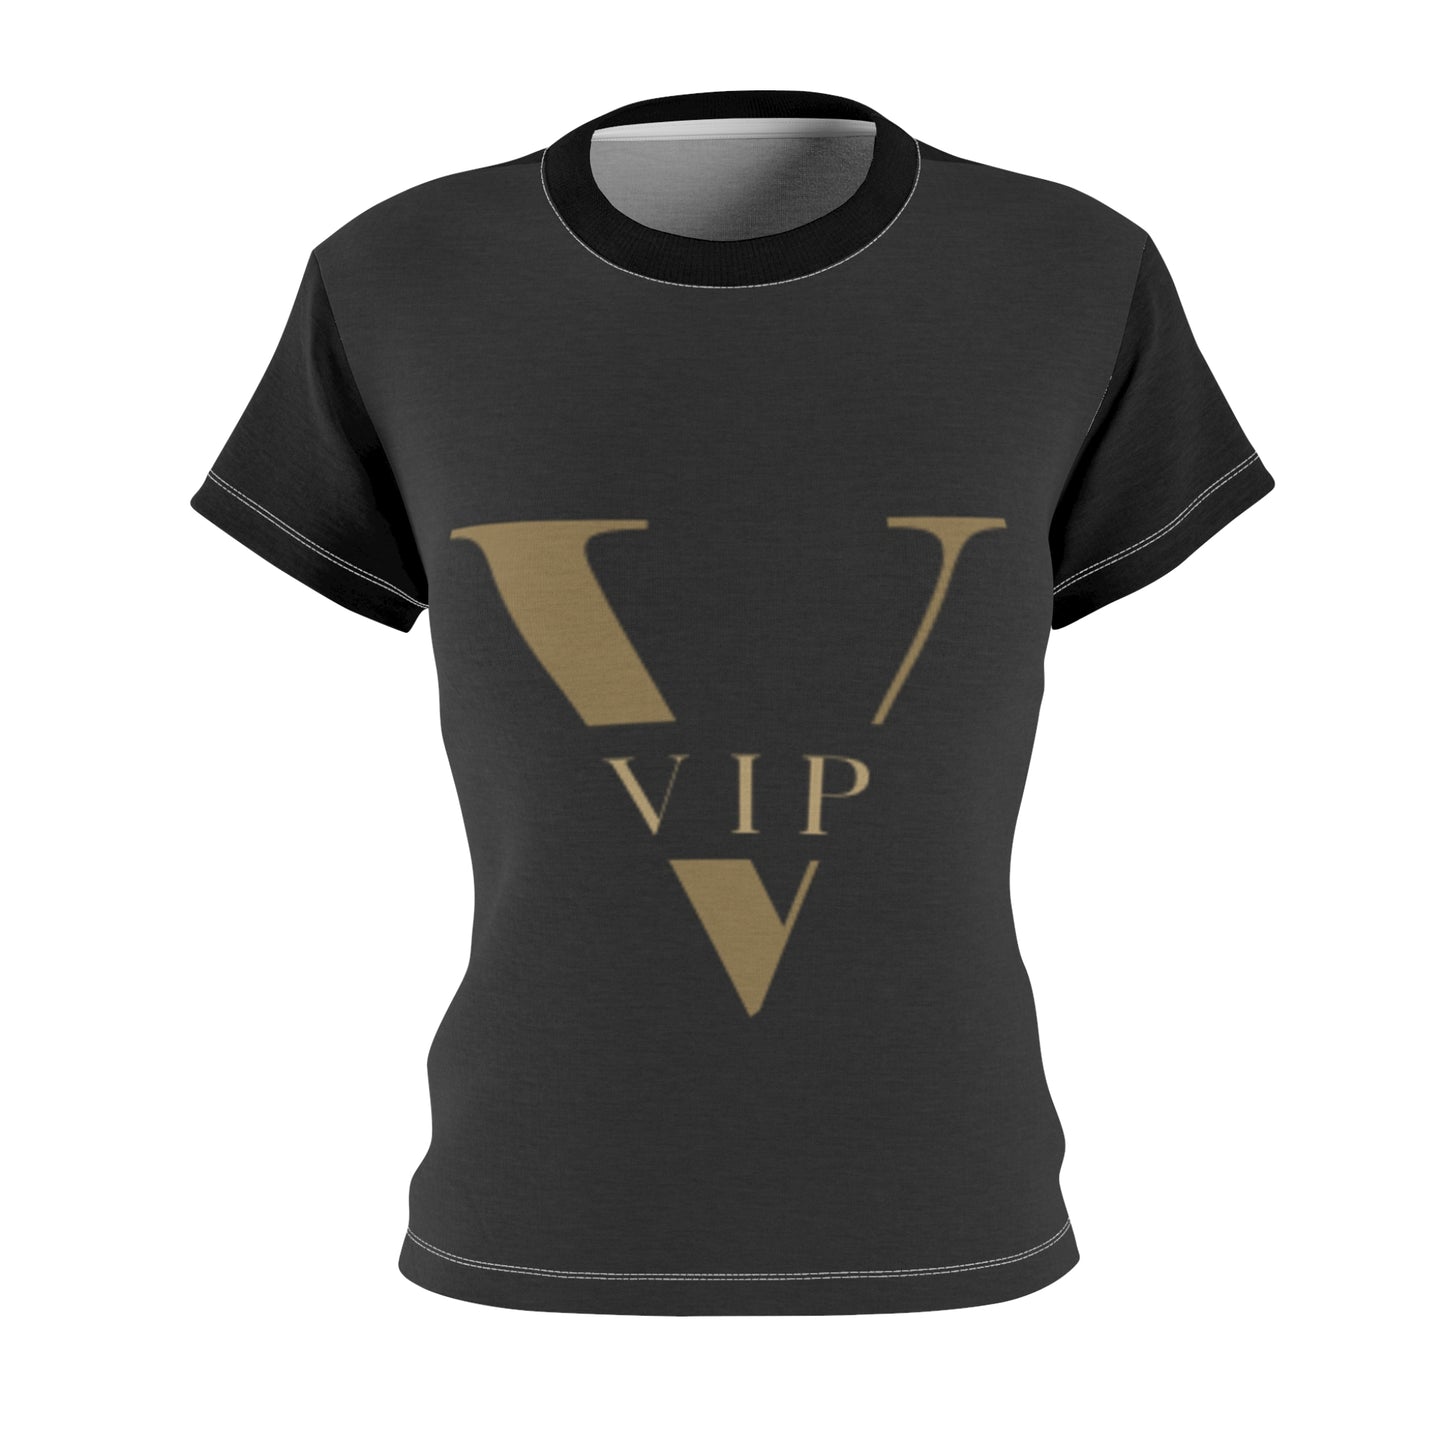 VIP Tee Shirt